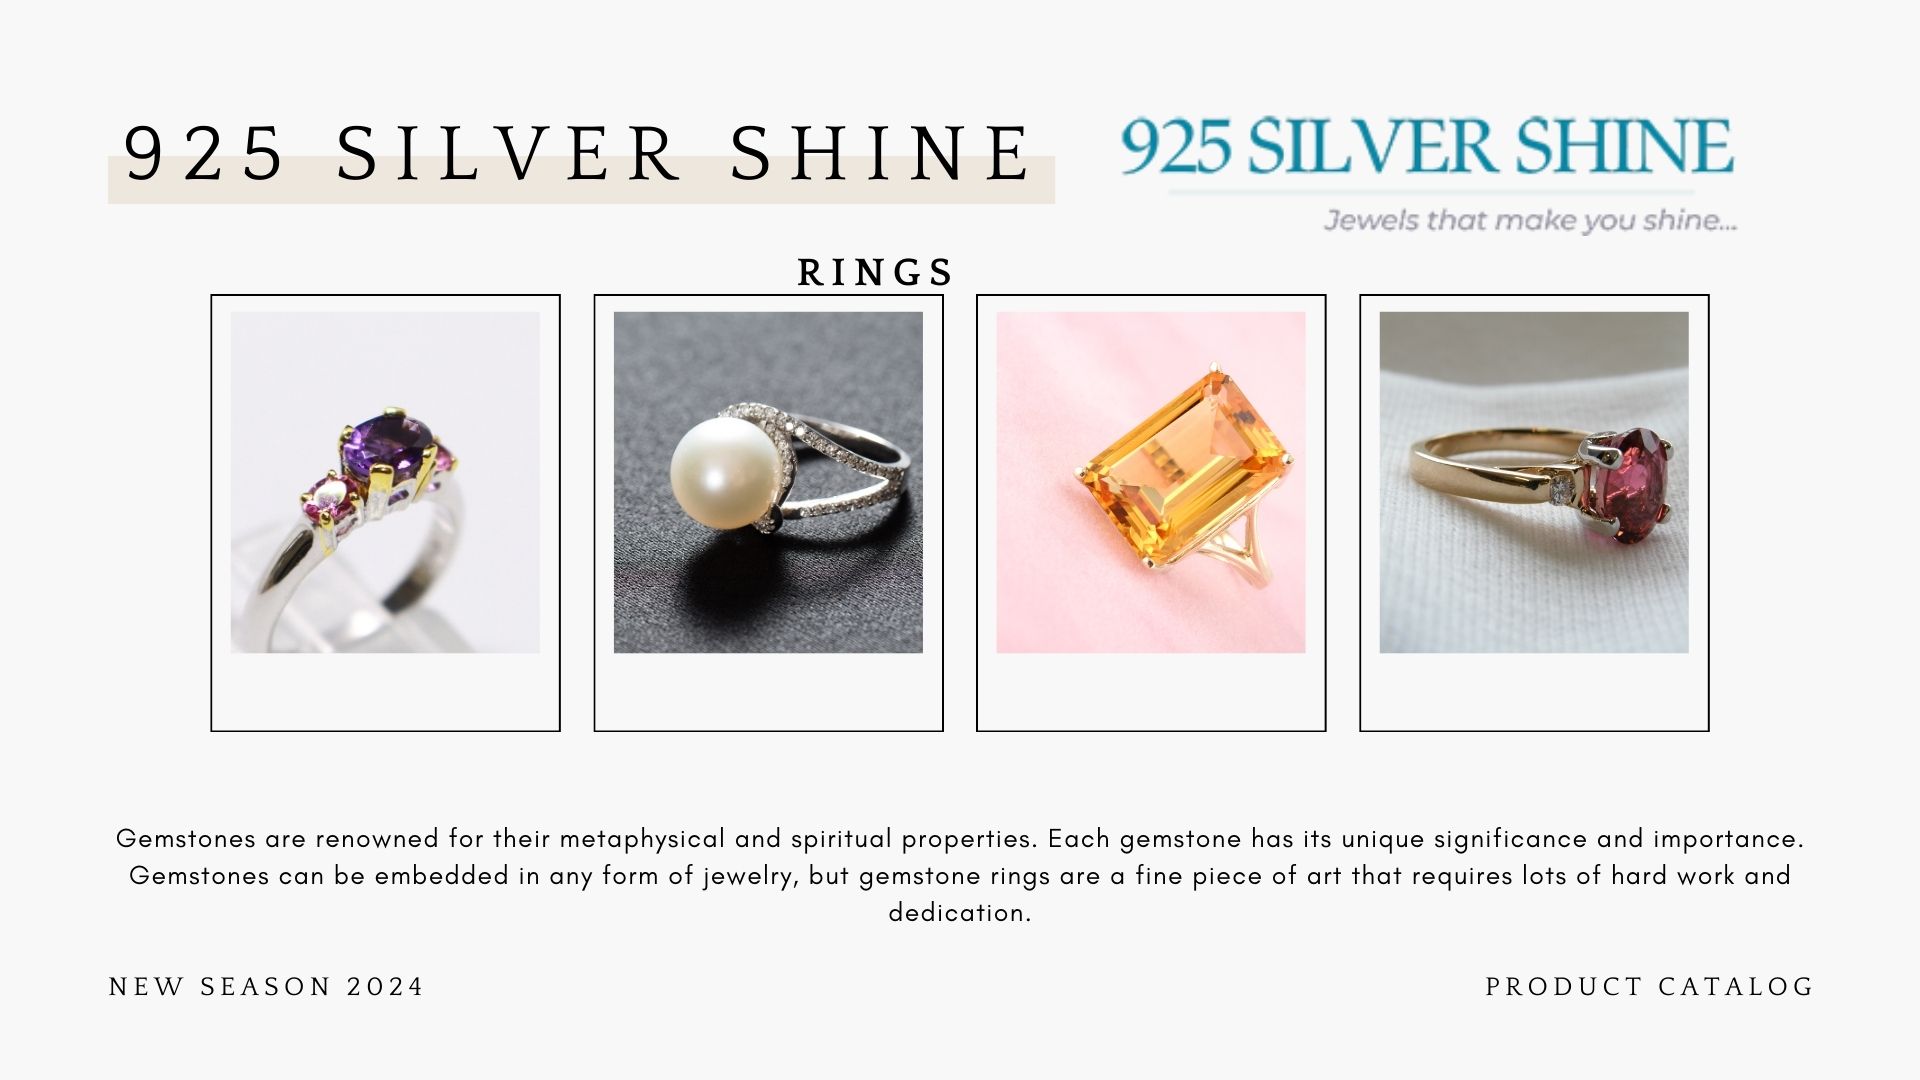 gemstone rings, gemstone jewelry, silver gemstone jewelry, gemstone jewelry wholesaler